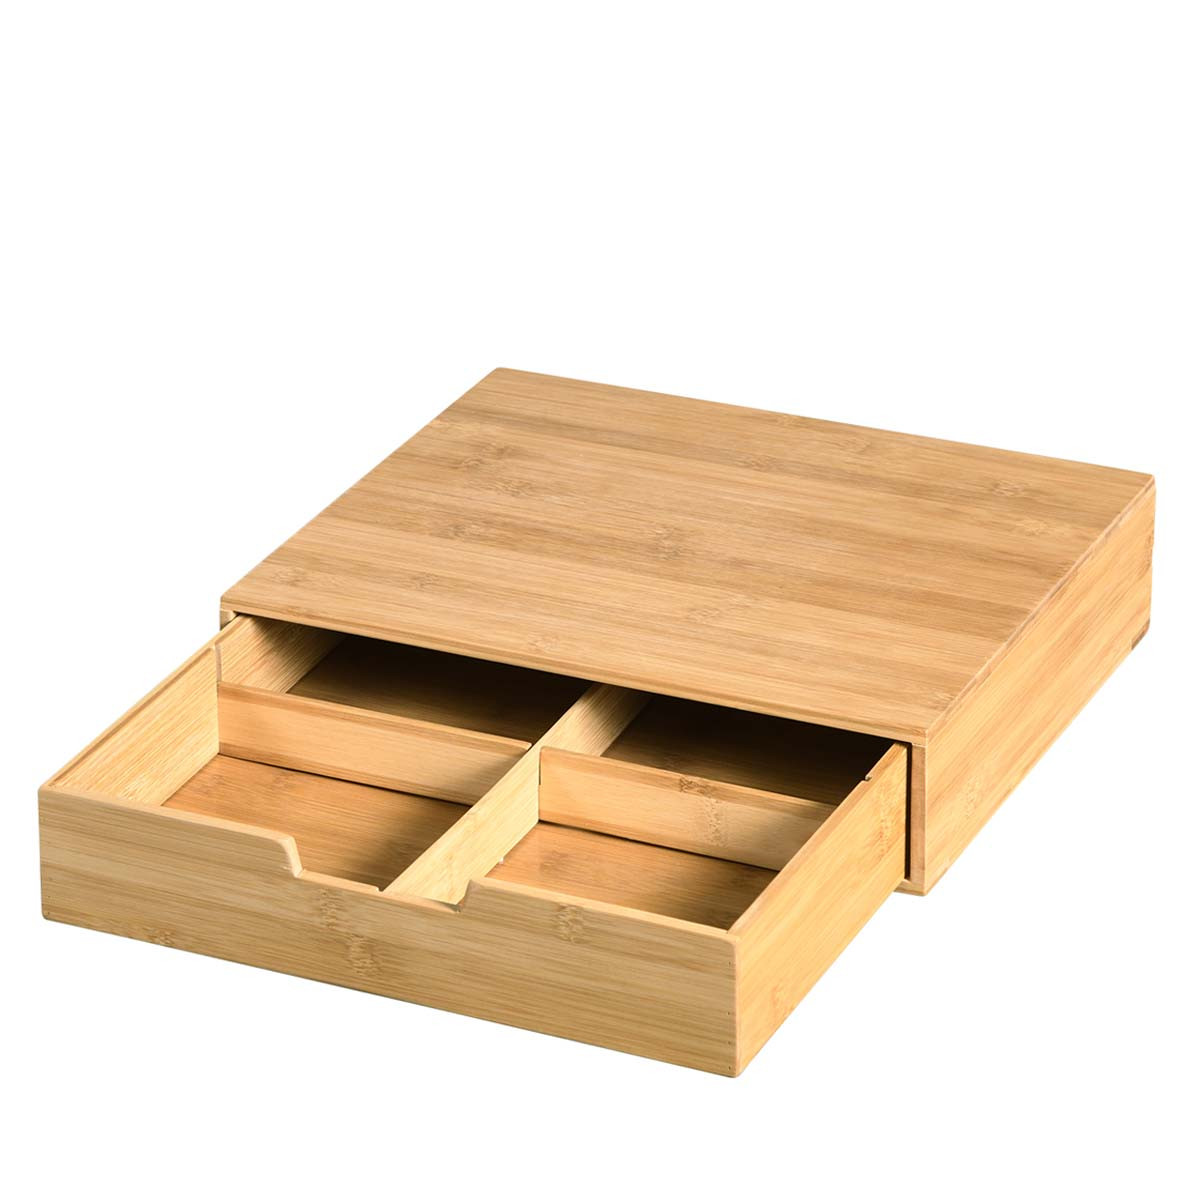 Rainsworth organisateur tiroir empilable en bambou – l, m, s boîte